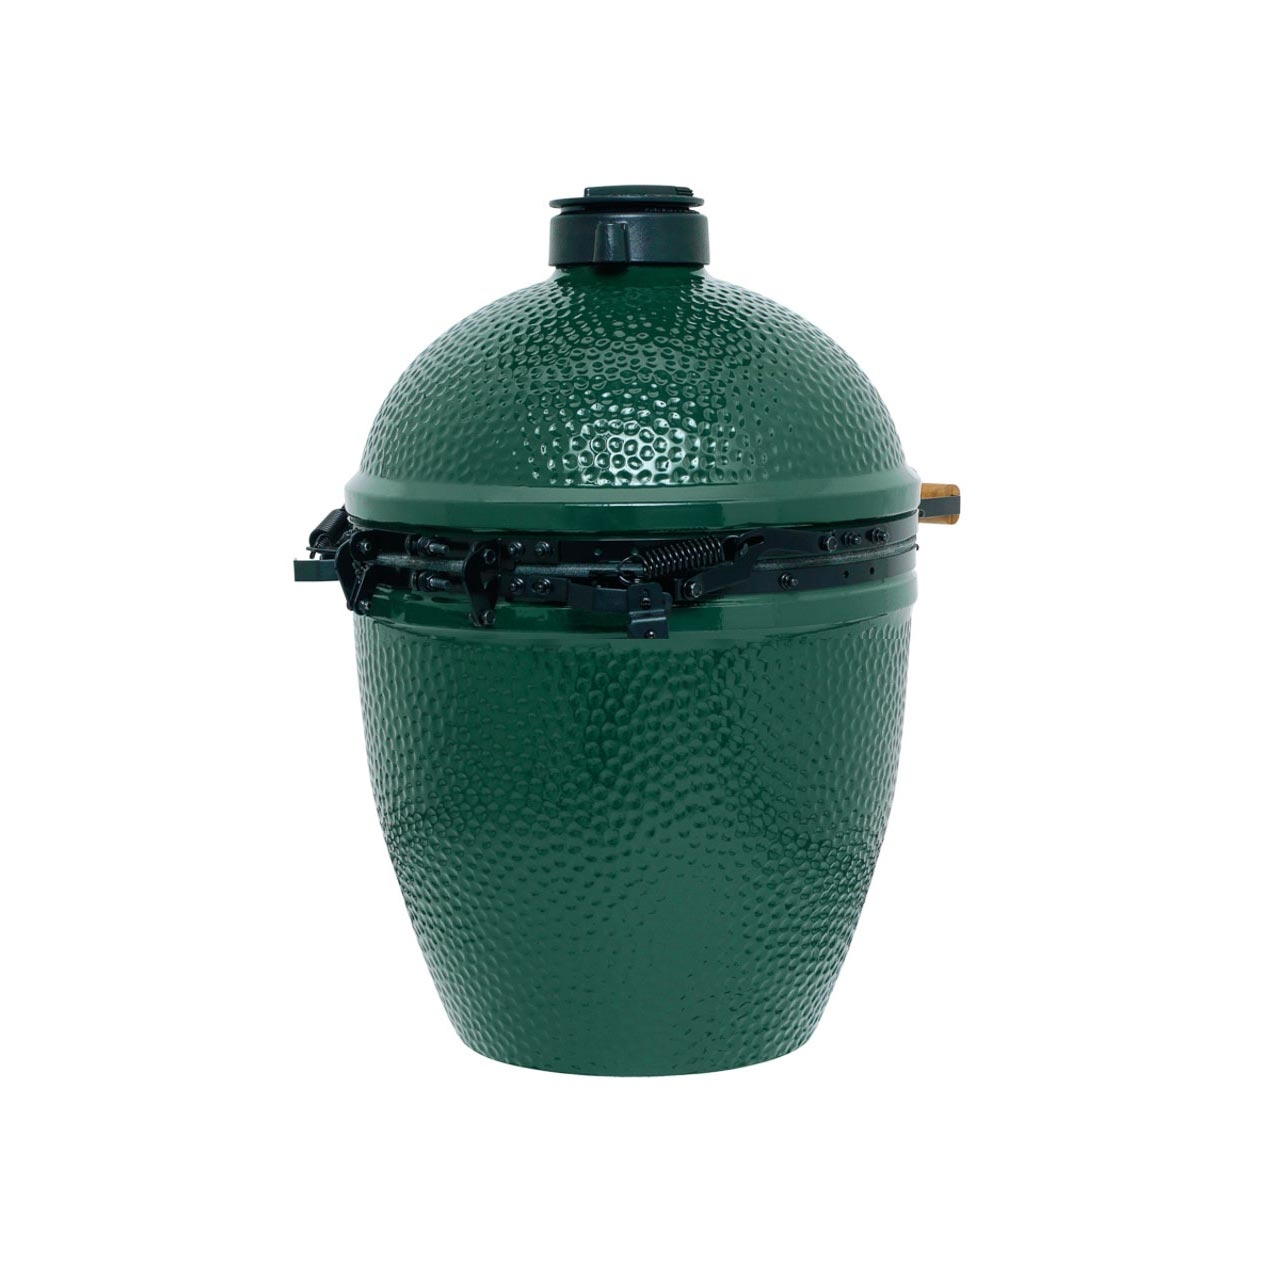 Big Green Egg Starter-Paket - Large, 46 cm Edelstahlrost, hochwertige Nasa Keramik, Nest mit robusten Schwenkrädern